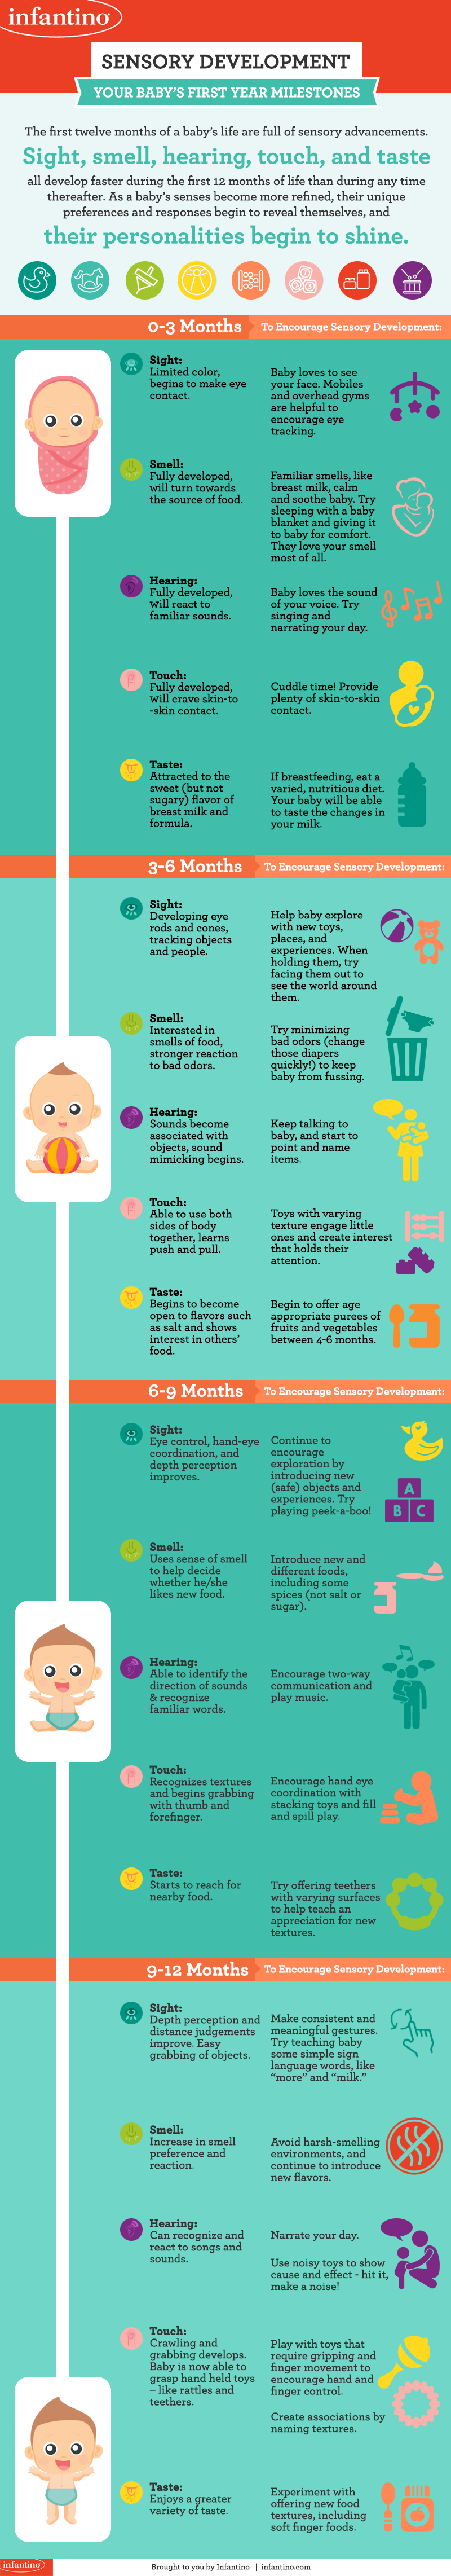 Baby Sensory Development Stages